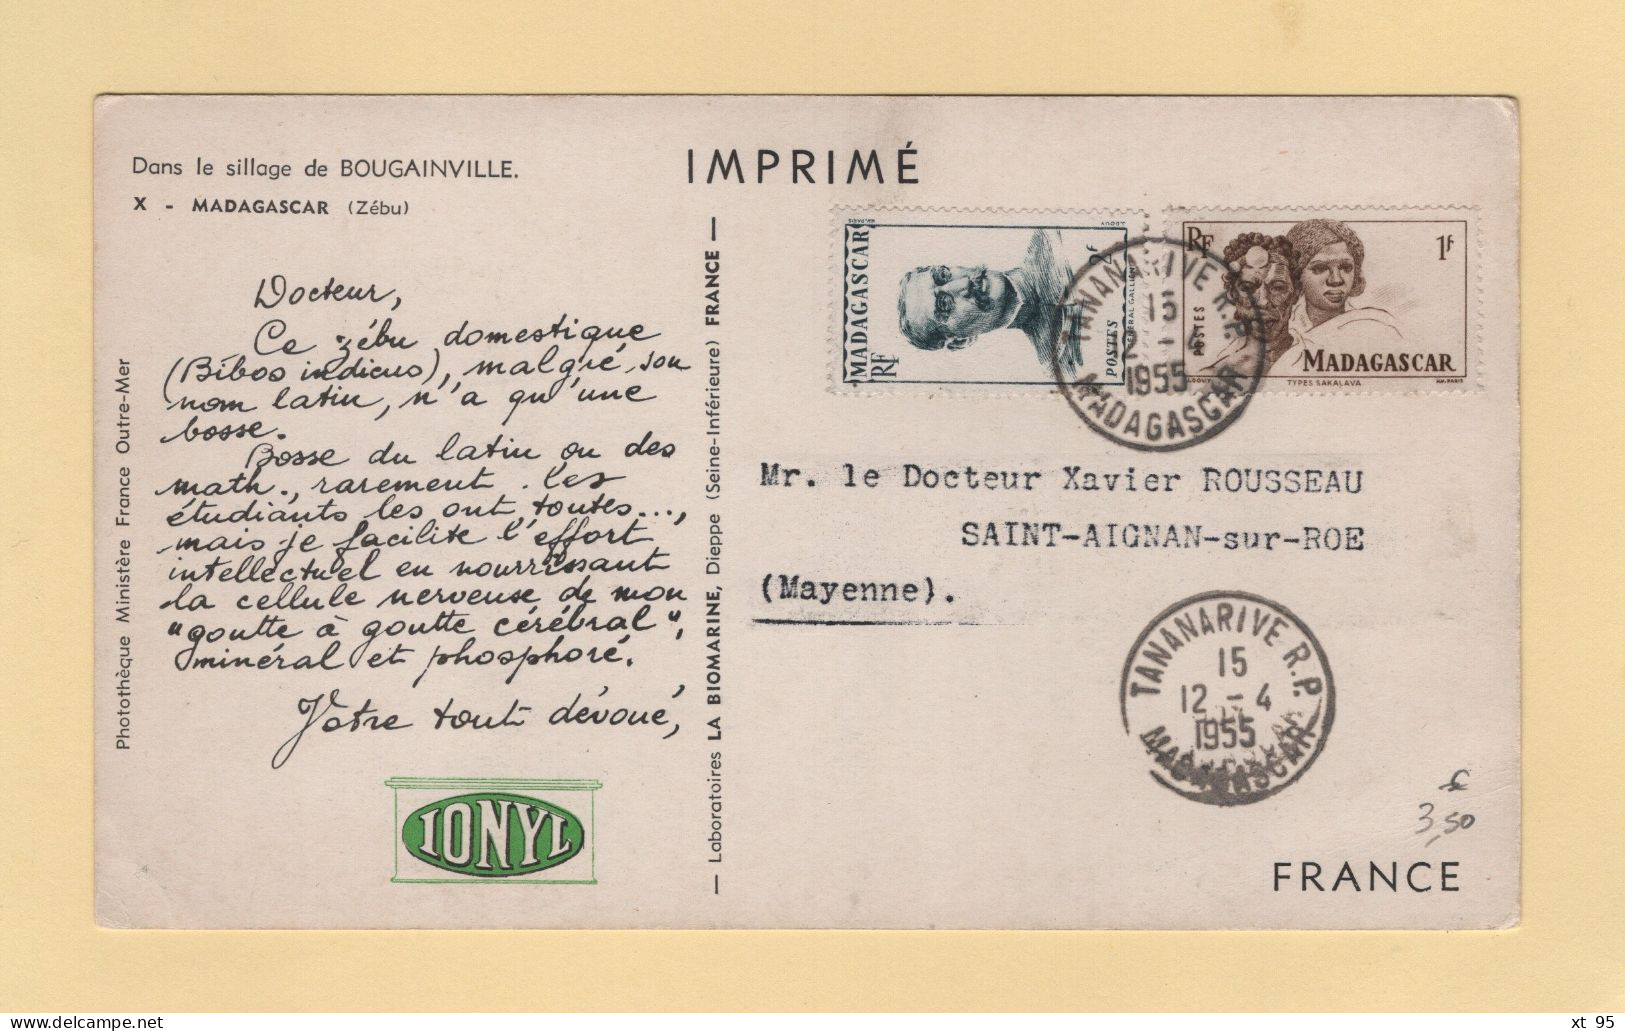 Madagascar - 1955 - Carte Plasmarine Ionyl - Dans Le Sillage De Bougainville - Zebu - Covers & Documents